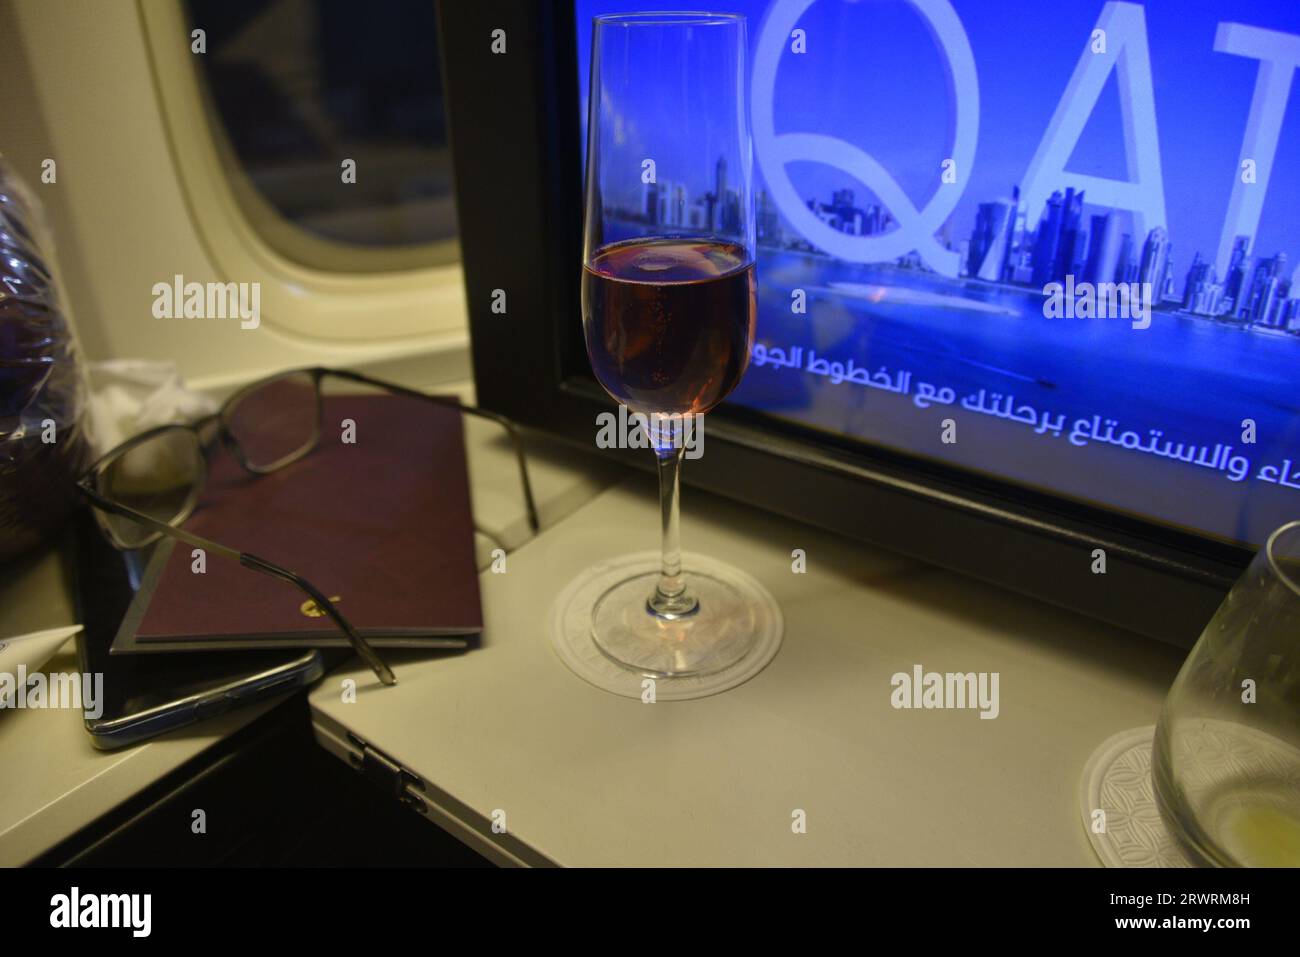 qatar Airways, A380 , business bar brandy, drink alcolici, Taste of paris, la migliore compagnia aerea del mondo Foto Stock